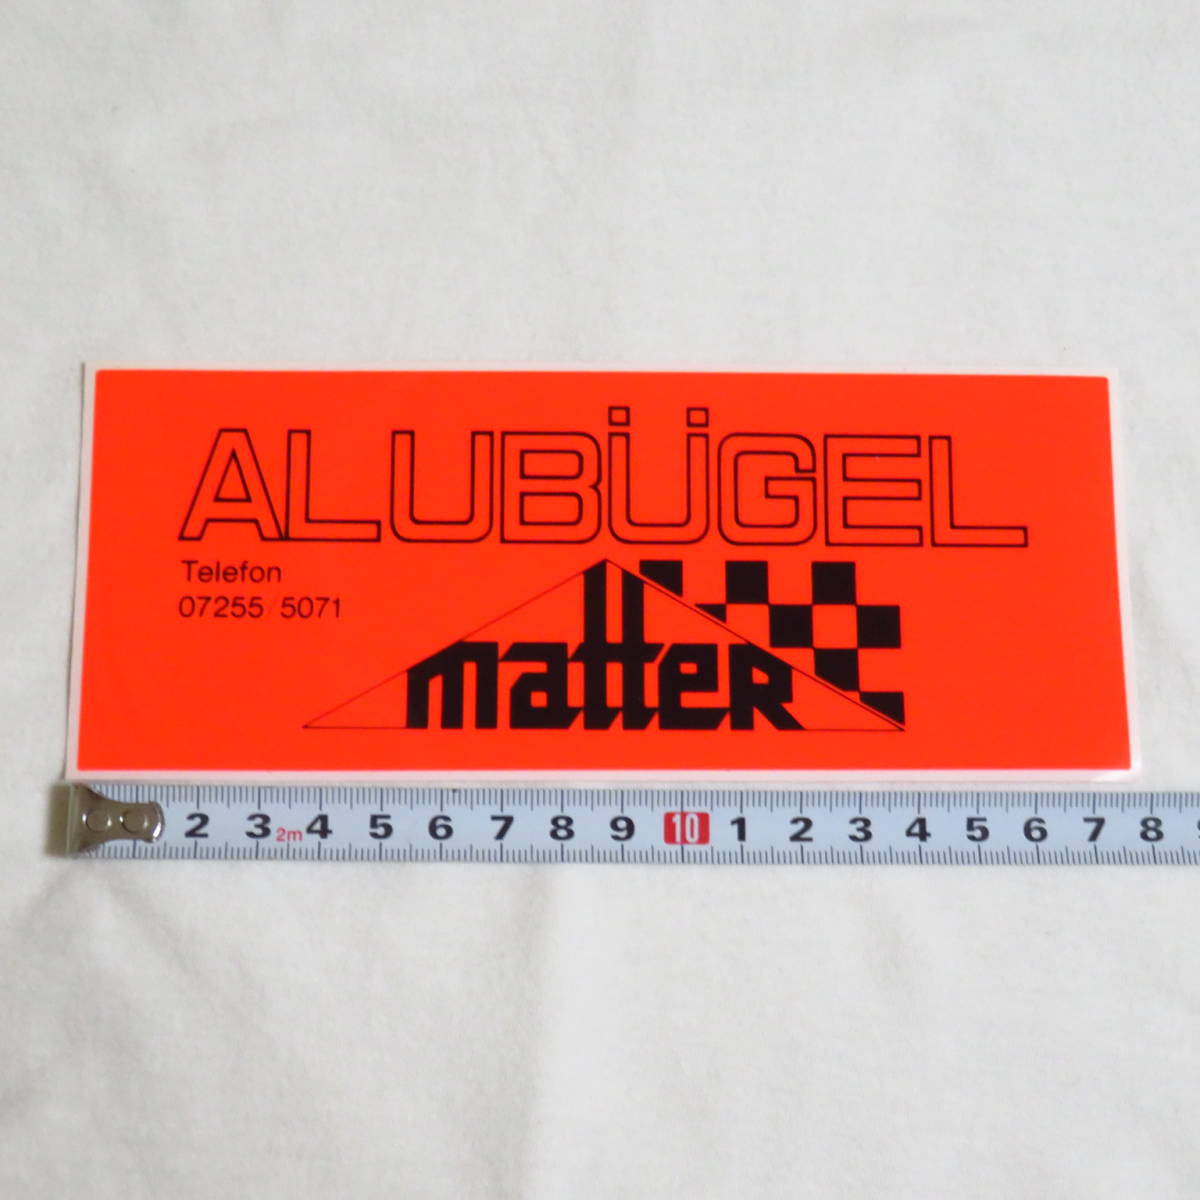 #MATTERmata- roll cage sticker fluorescence orange replica goods 2 pieces set Porsche 911 930 964 993 #